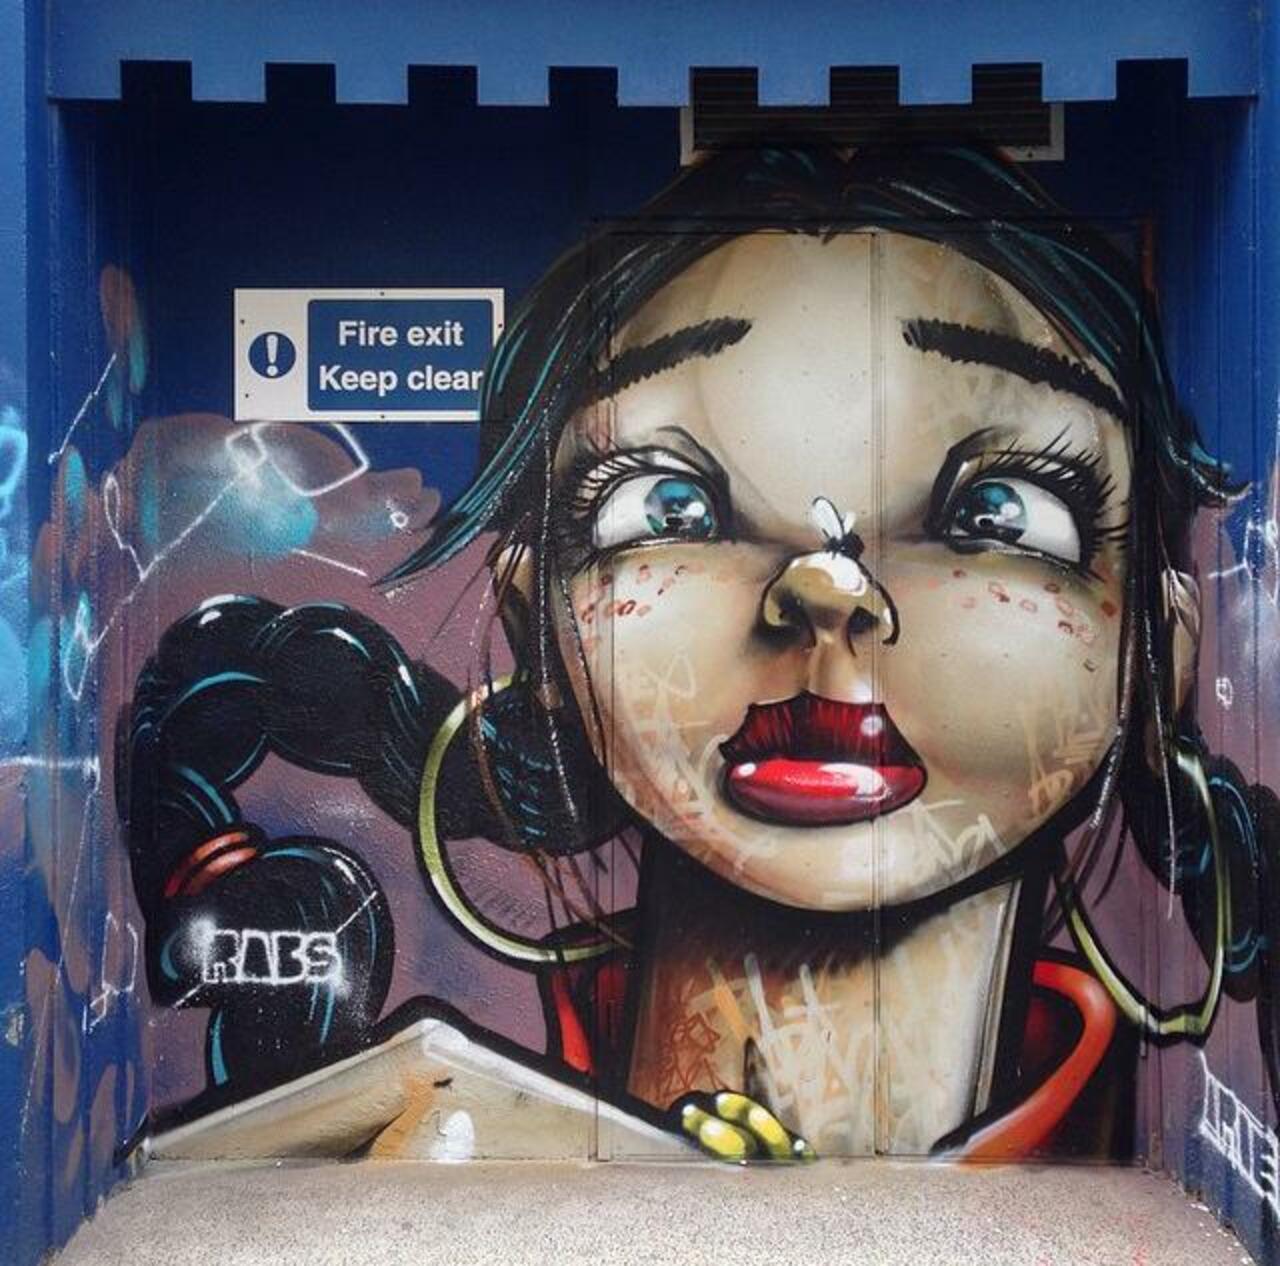 New Street Art piece by • aroe_msk 

#art #arte #graffiti #streetart http://t.co/7vKf6iMw7i